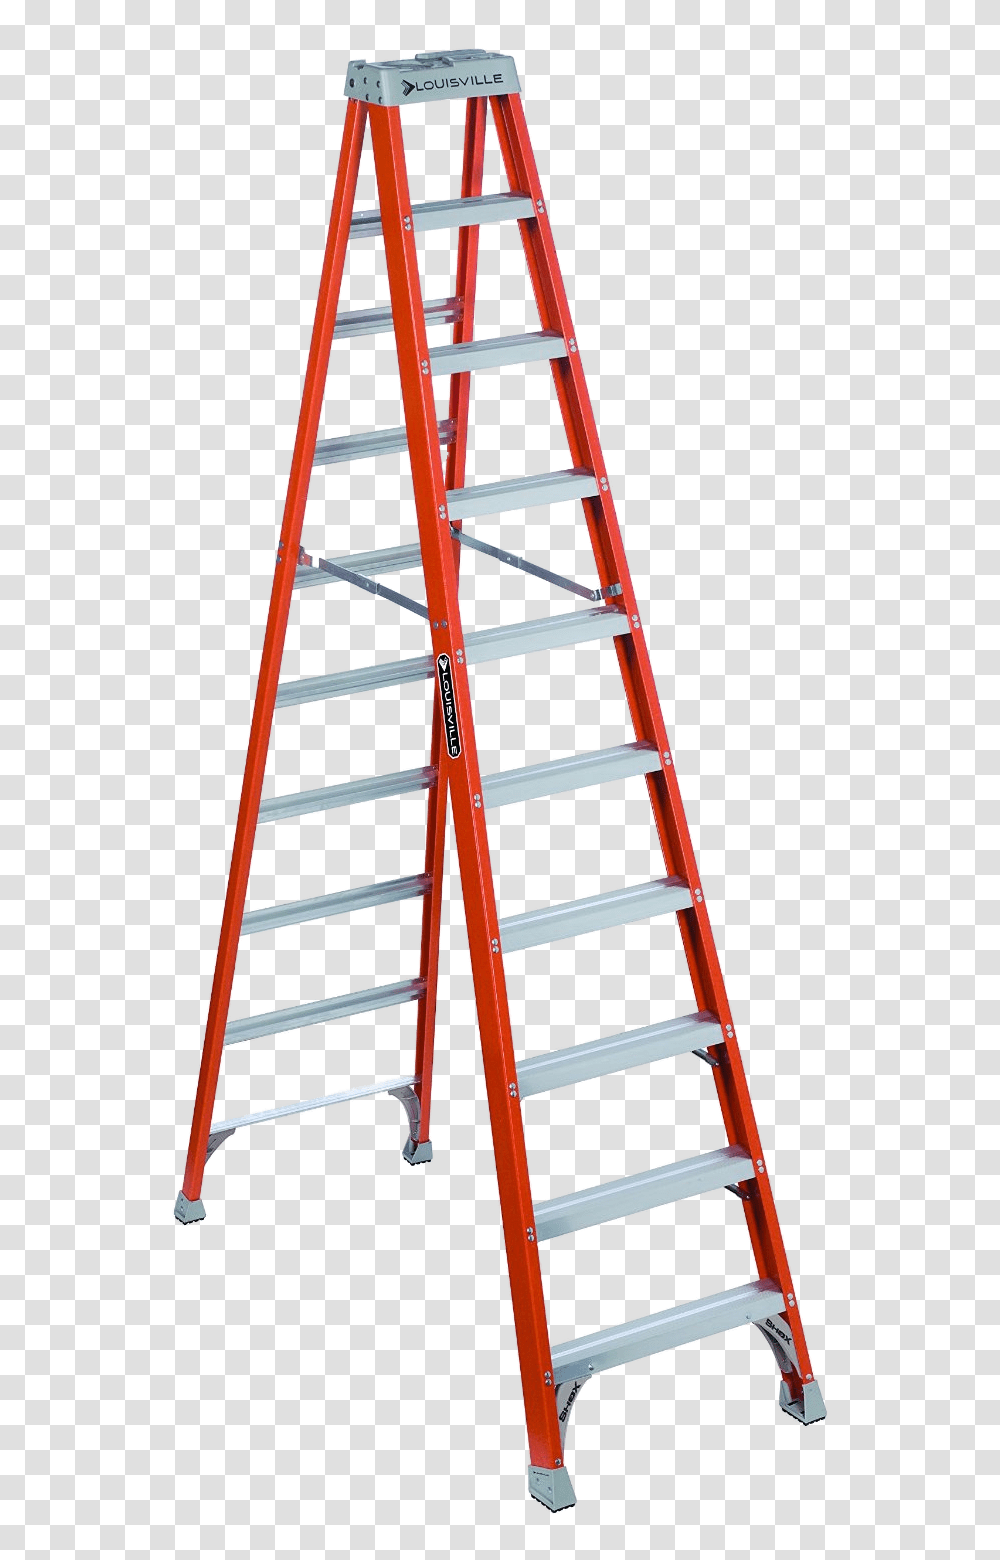 Ladder Images Wwe Ladder, Furniture, Chair, Bar Stool, Tabletop Transparent Png